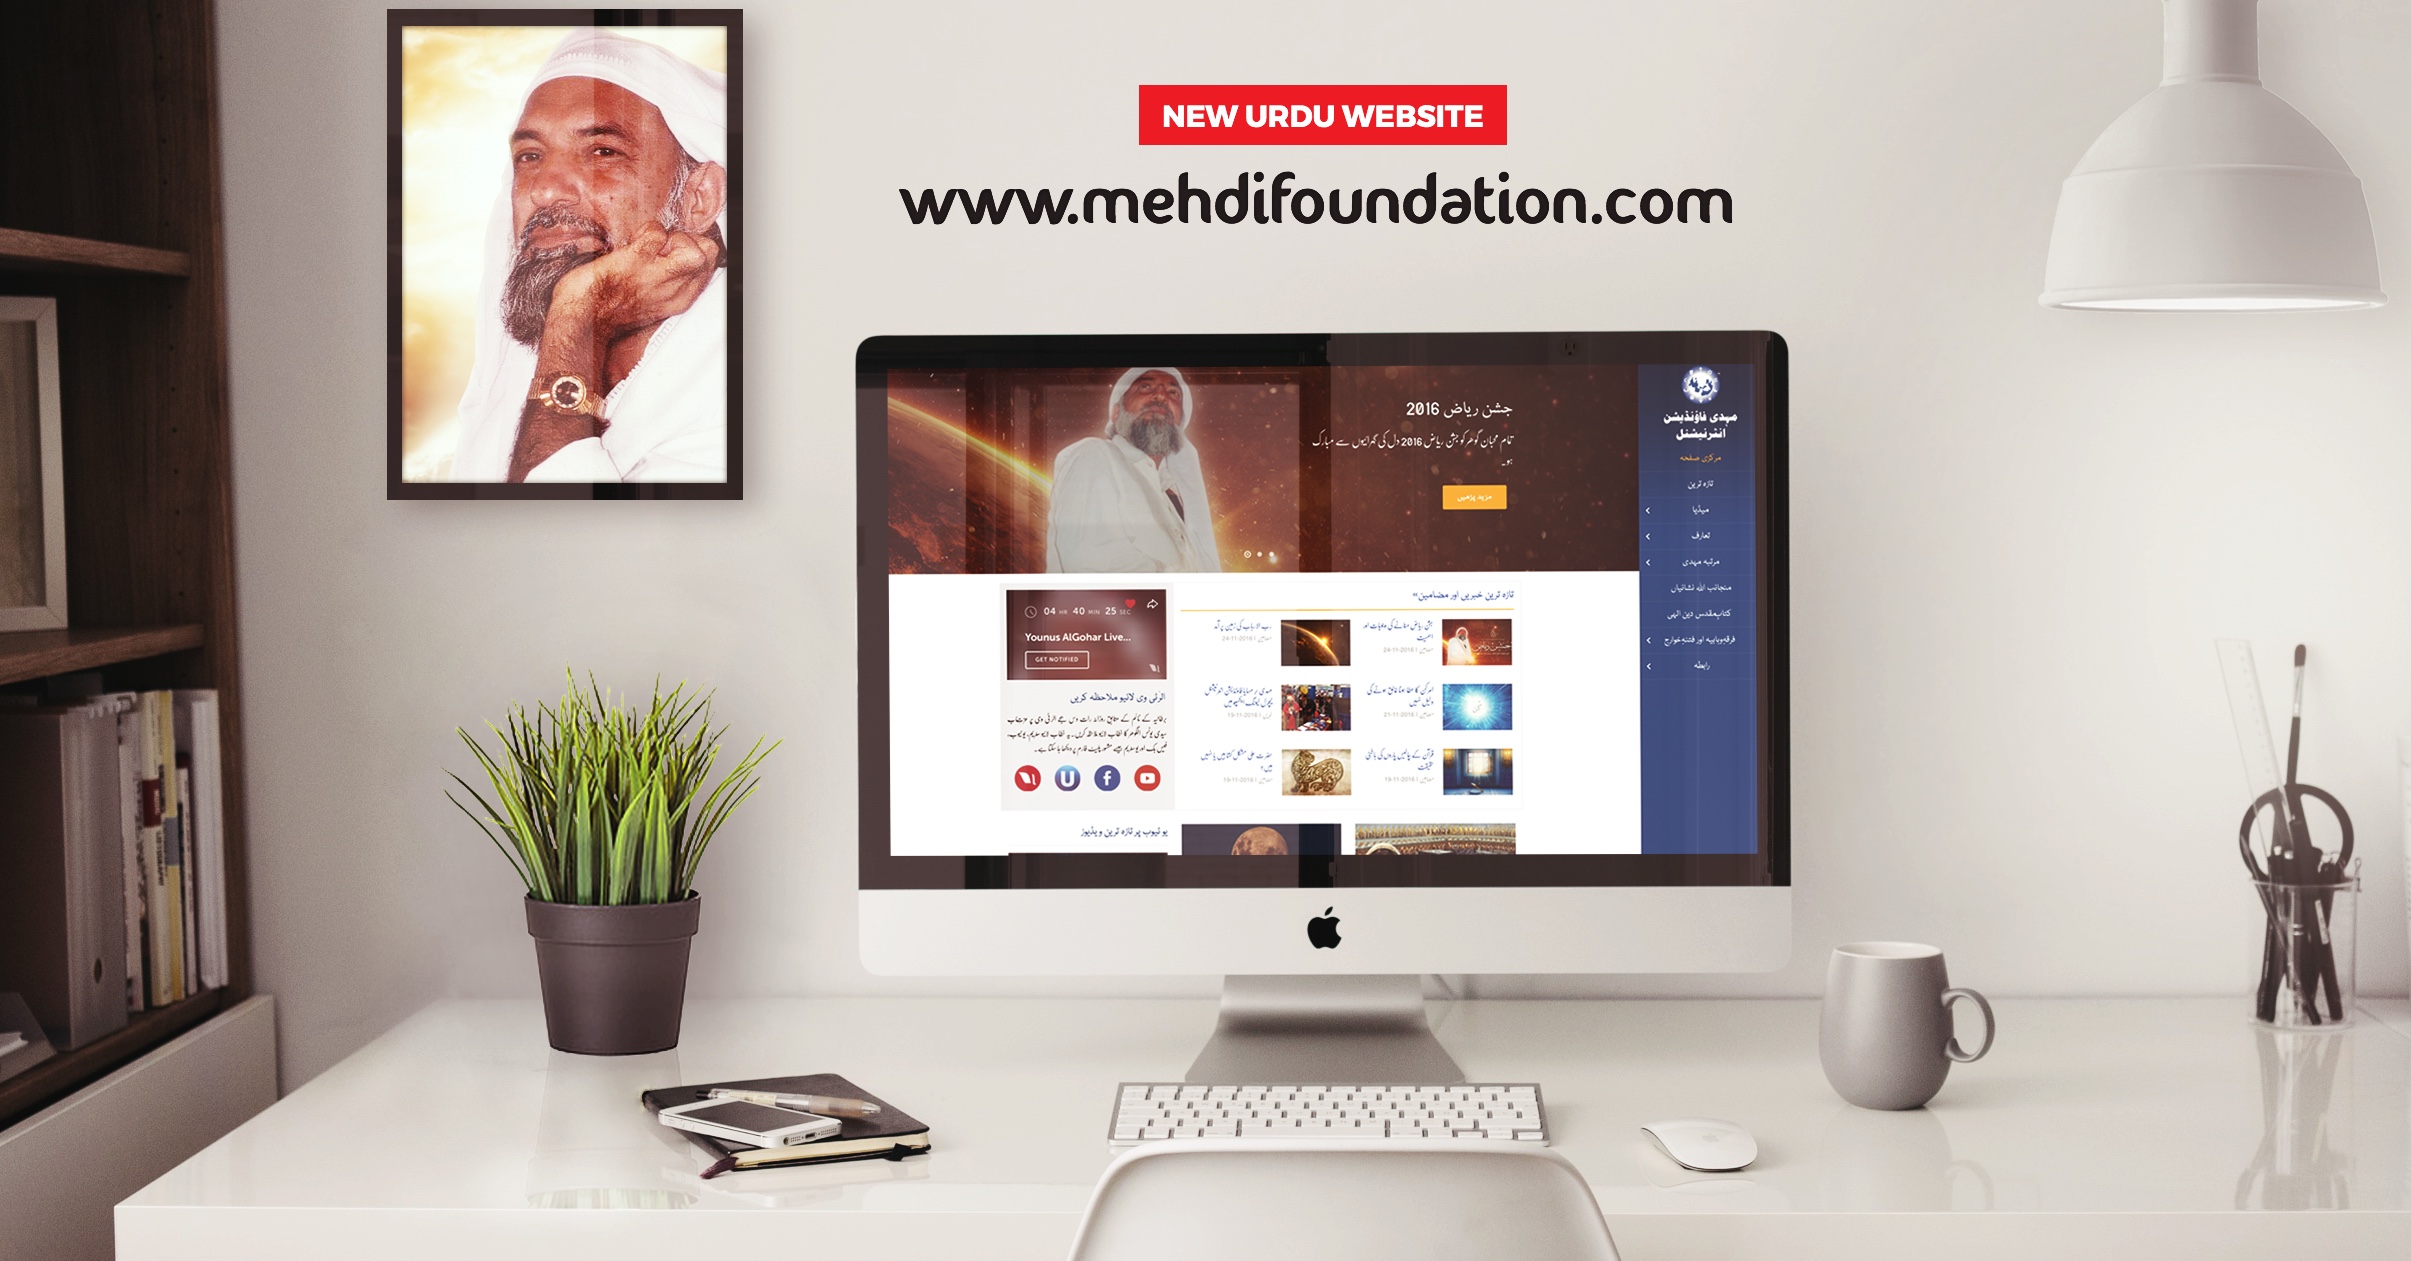 NEW URDU WEBSITE: MehdiFoundation.com